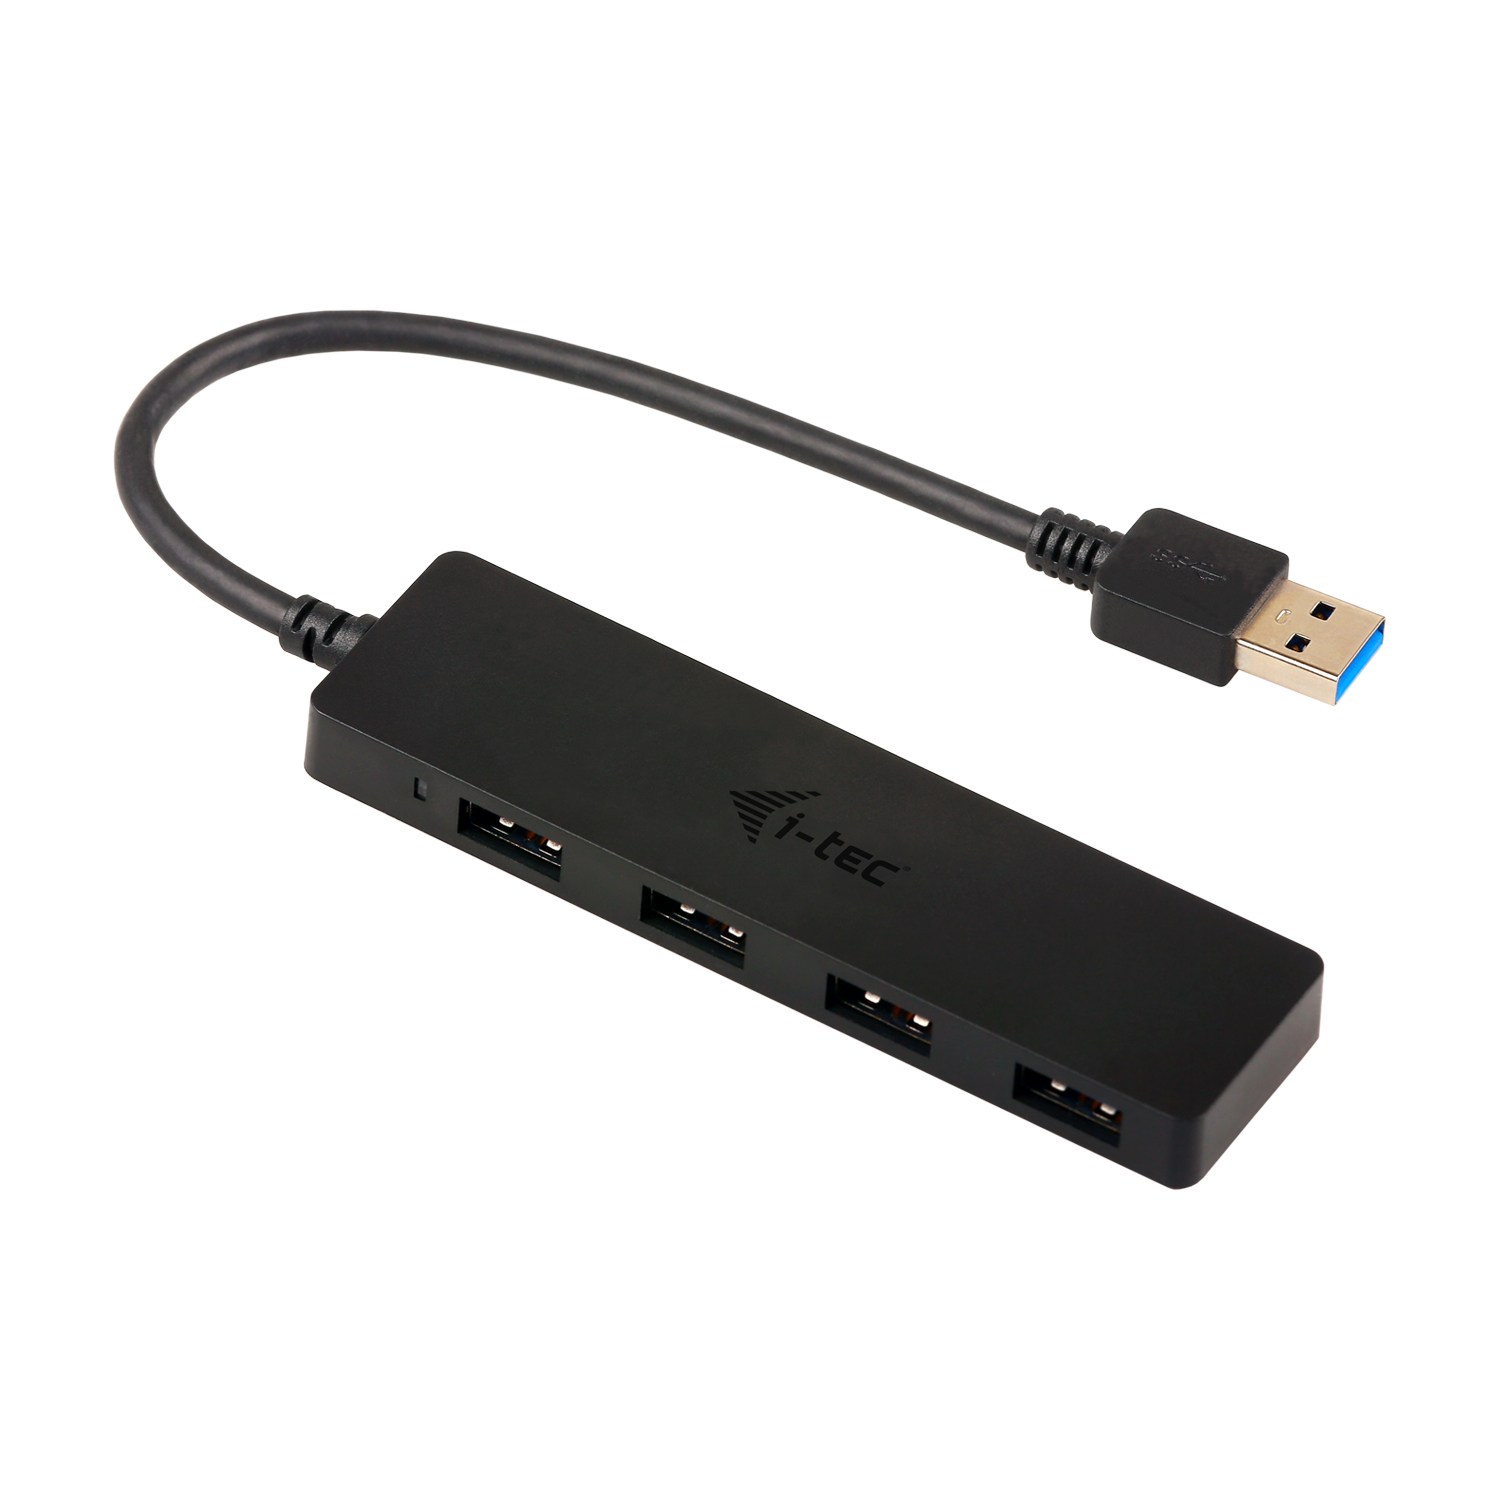 I-Tec USB 3.0 SLIM HUB 4 Port passive - Black U3HUB404